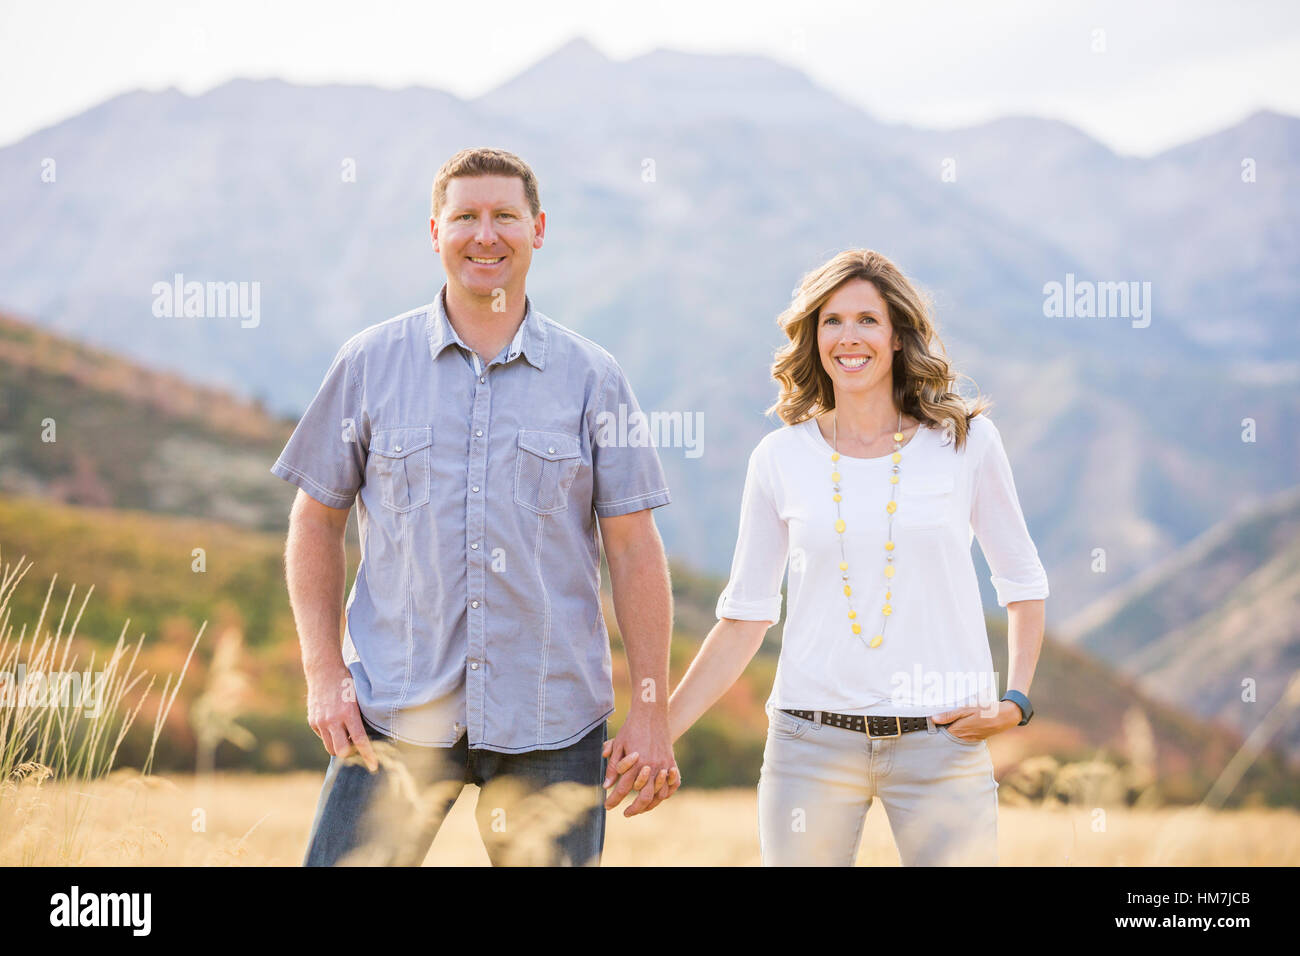 USA, Utah, Provo, Smiling couple holding hands Stock Photo